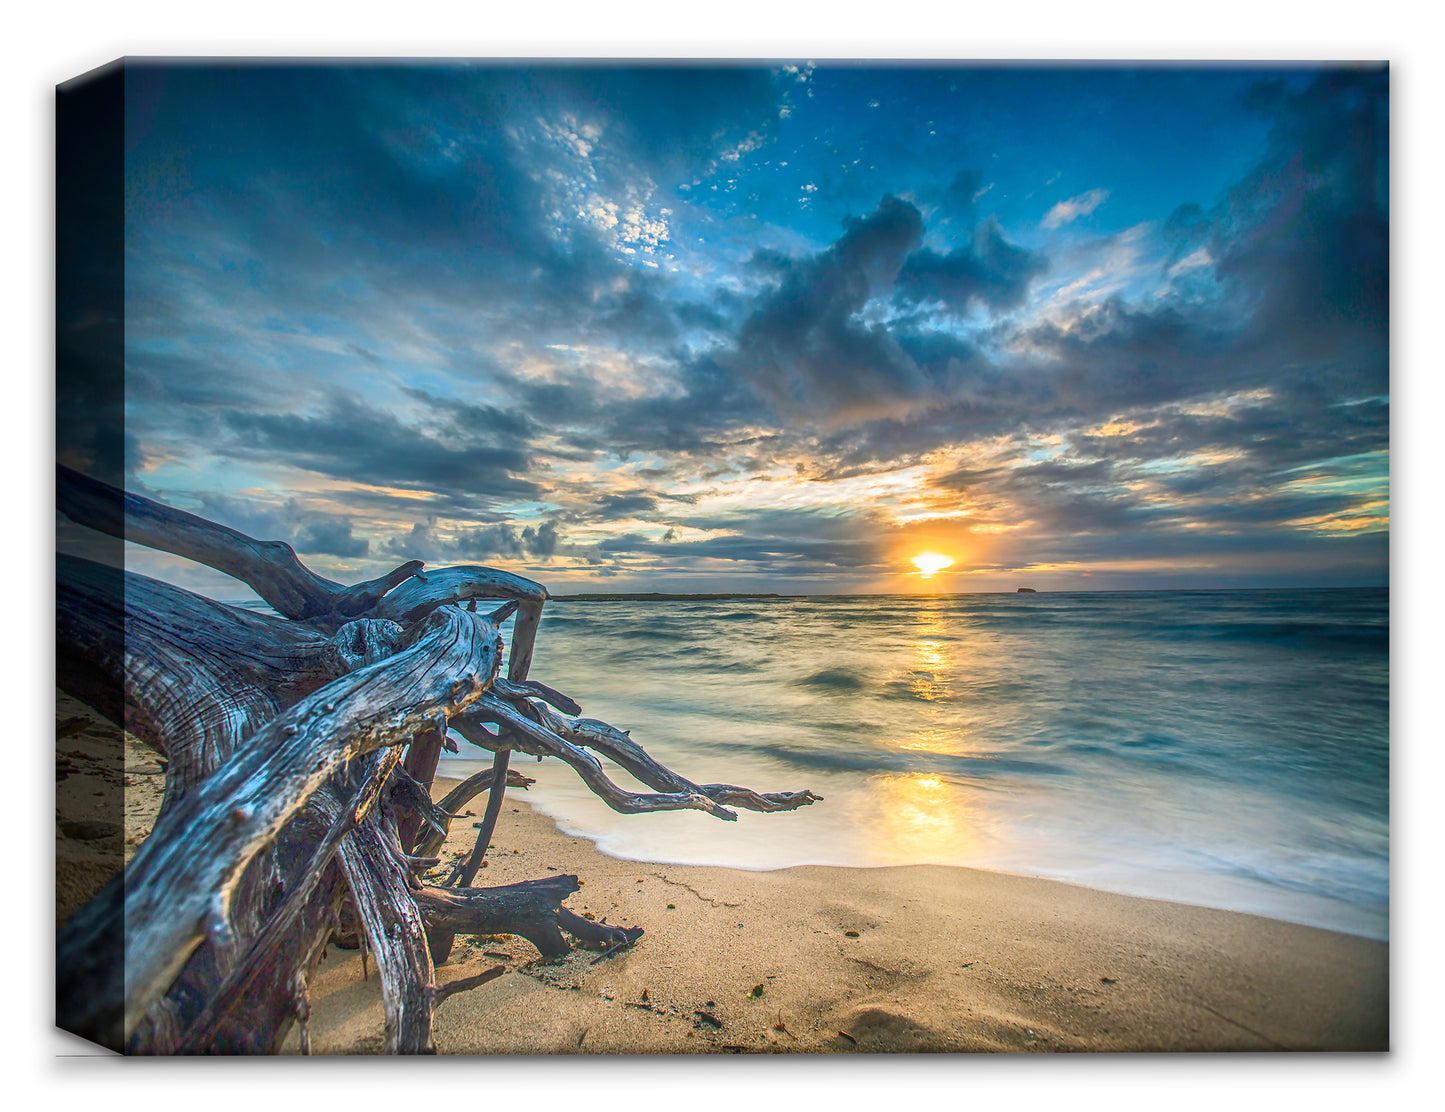 Driftwood, Beach & Ocean at Dawn - Fine Art Photography